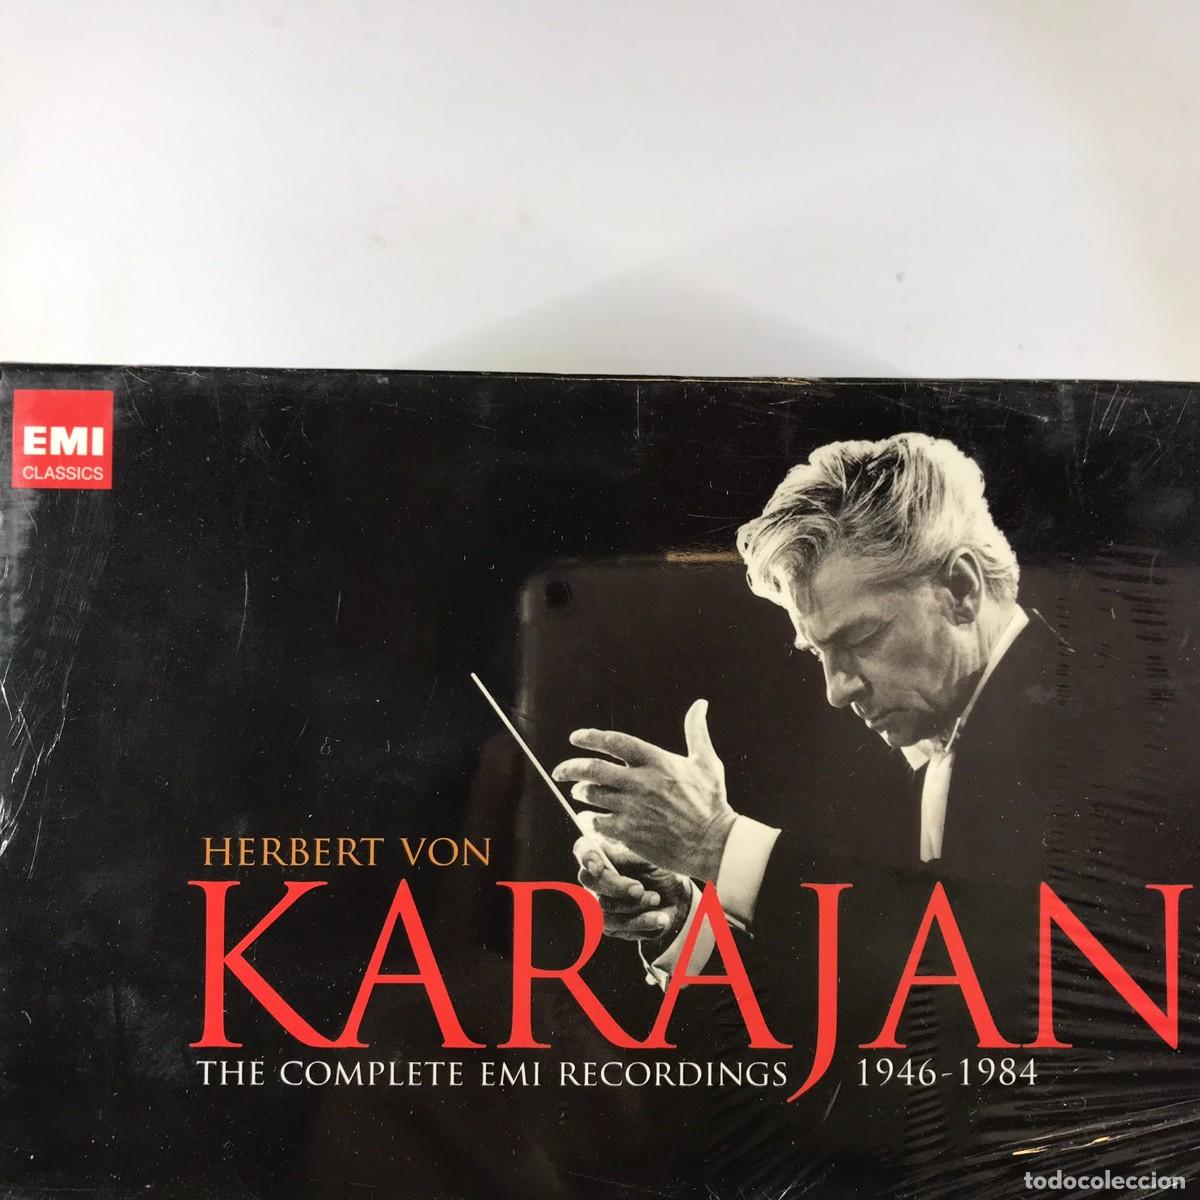 Karajan Complete EMI Recordings 1946-1984. Vol. 1 - Orchestral